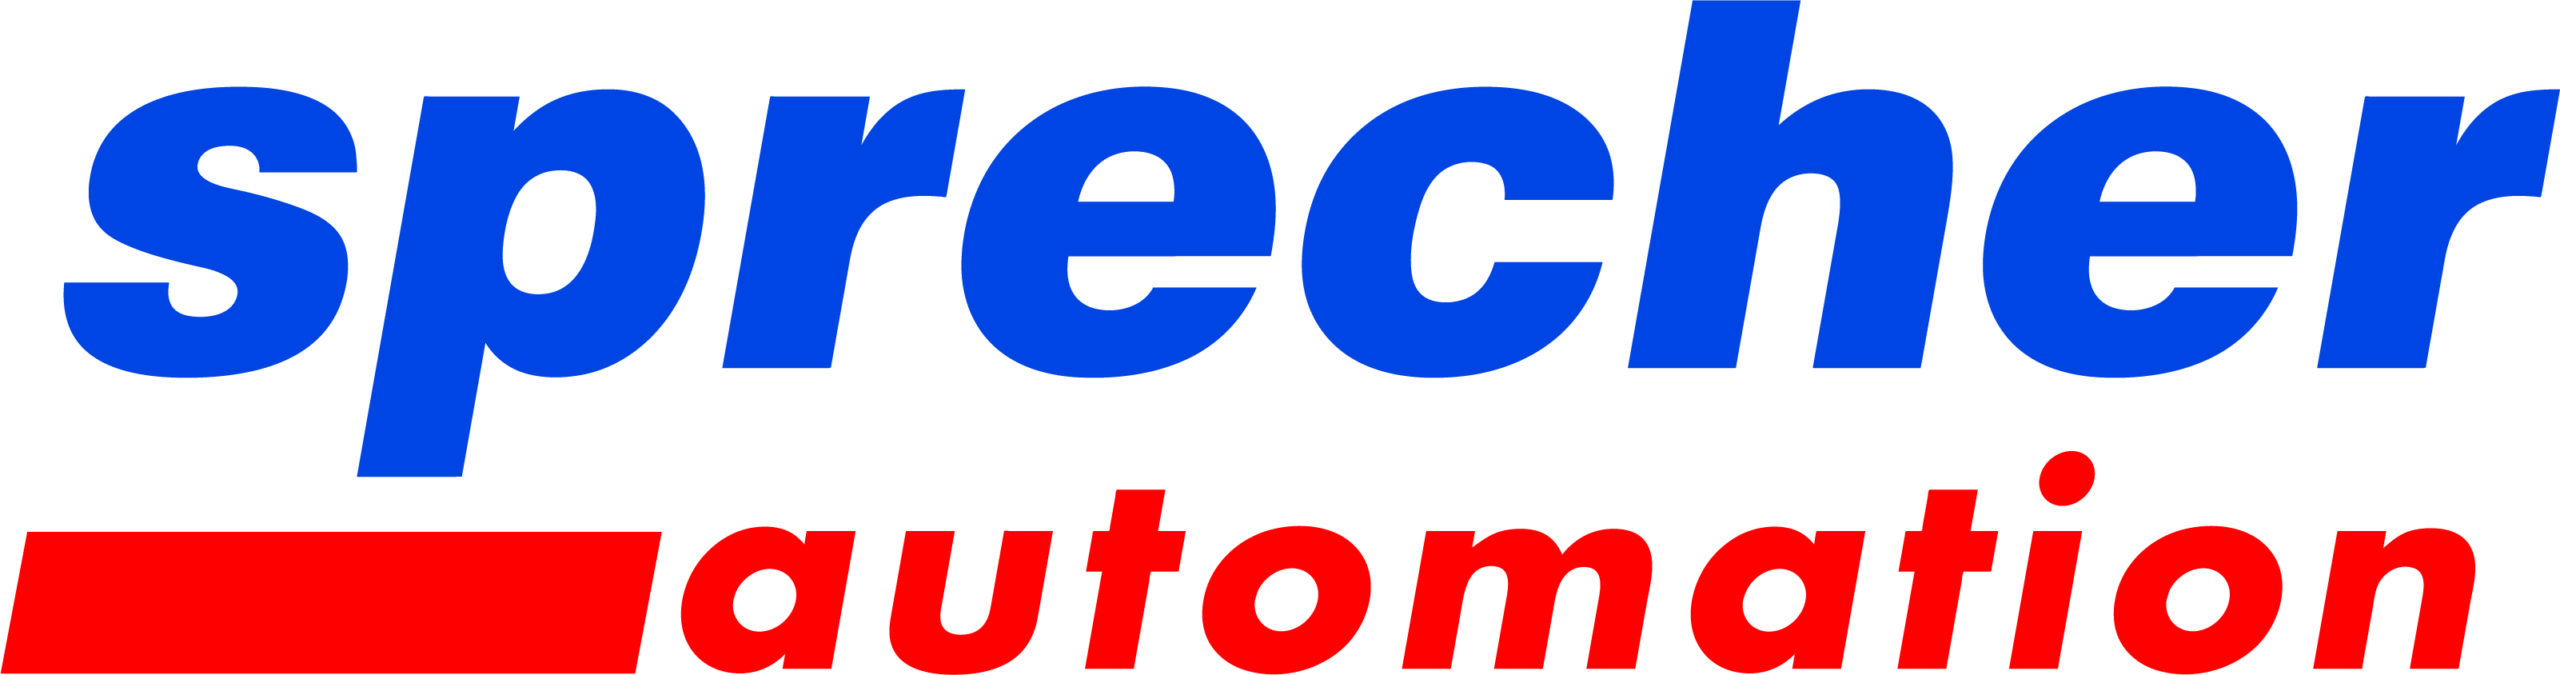 Sprecher Automation GmbH_logo